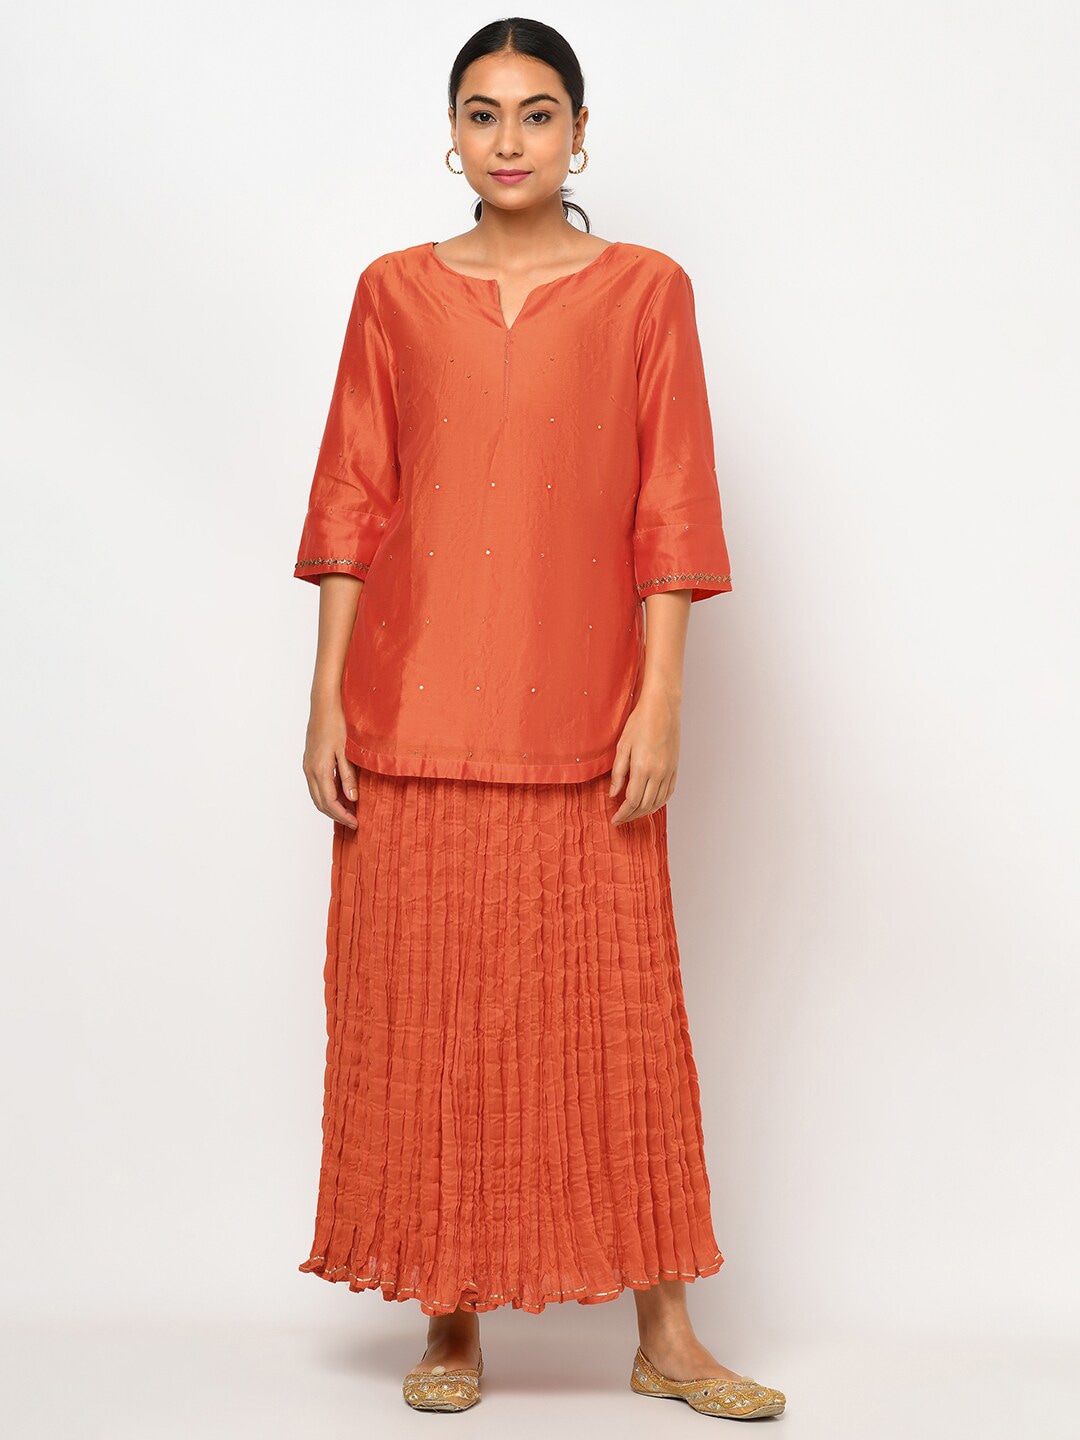 Fabindia Women Orange Printed Top with Skirt Price in India